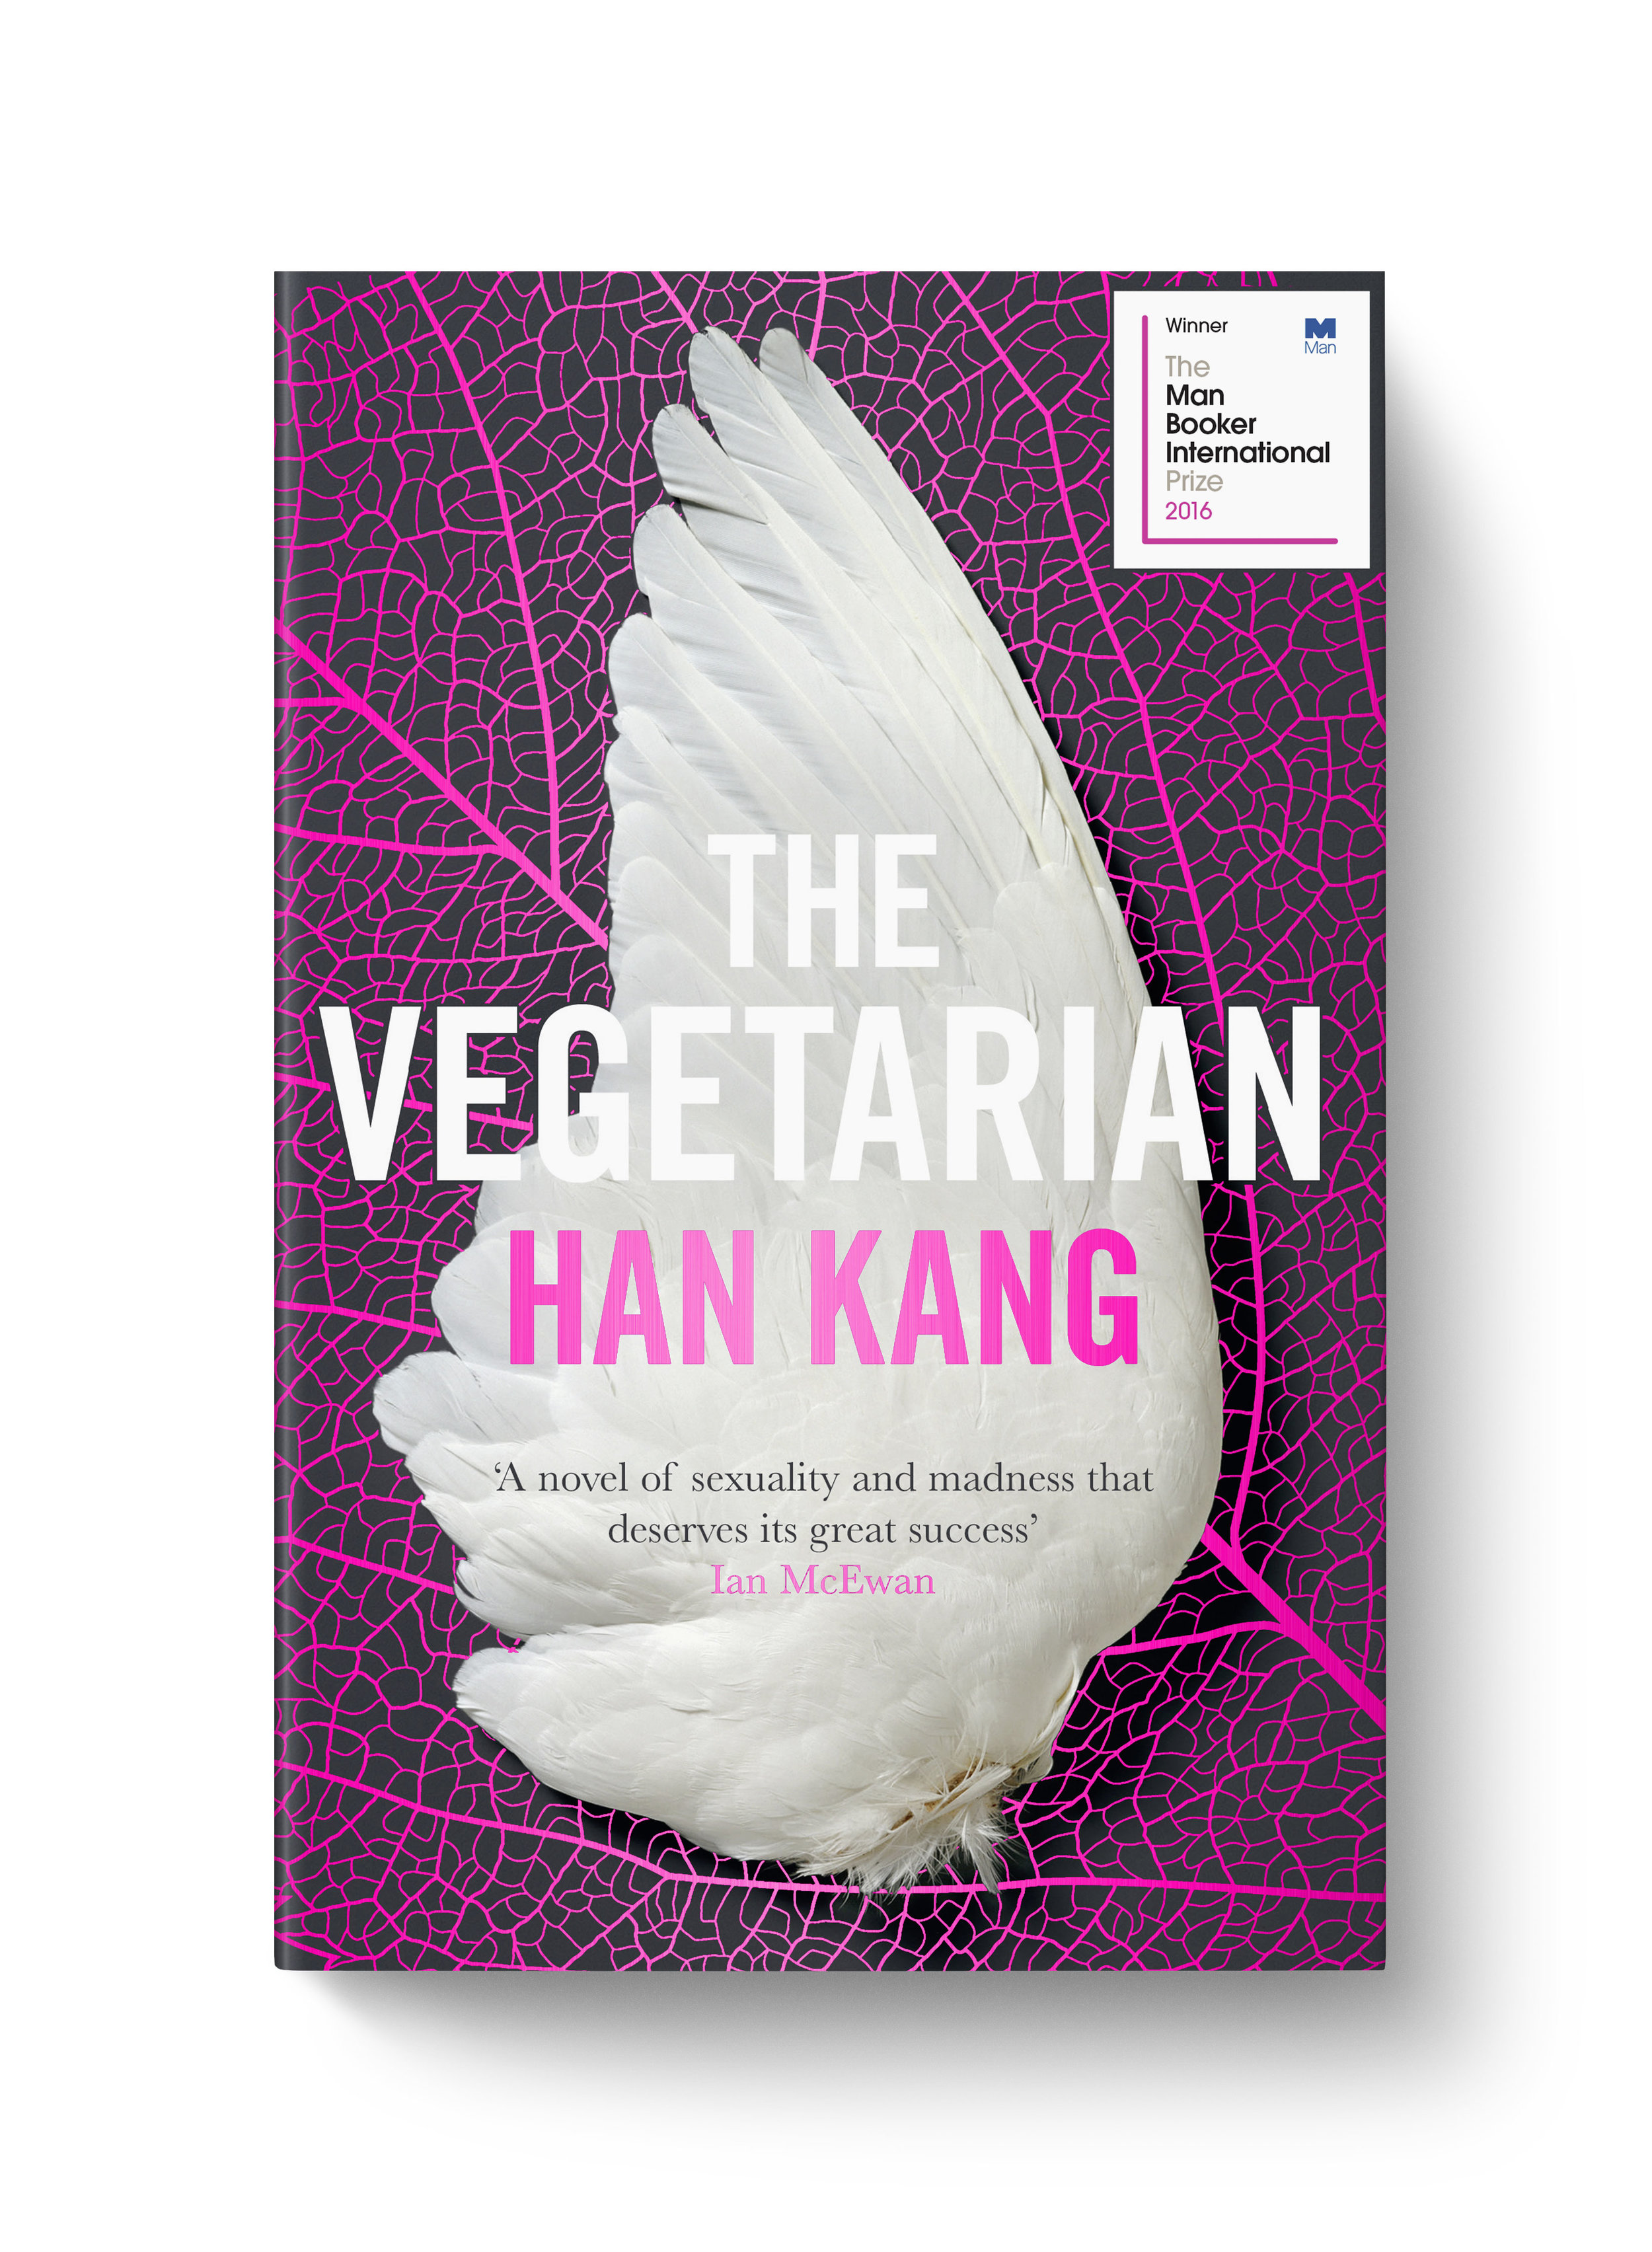   The Vegetarian  Han Kang  Granta 